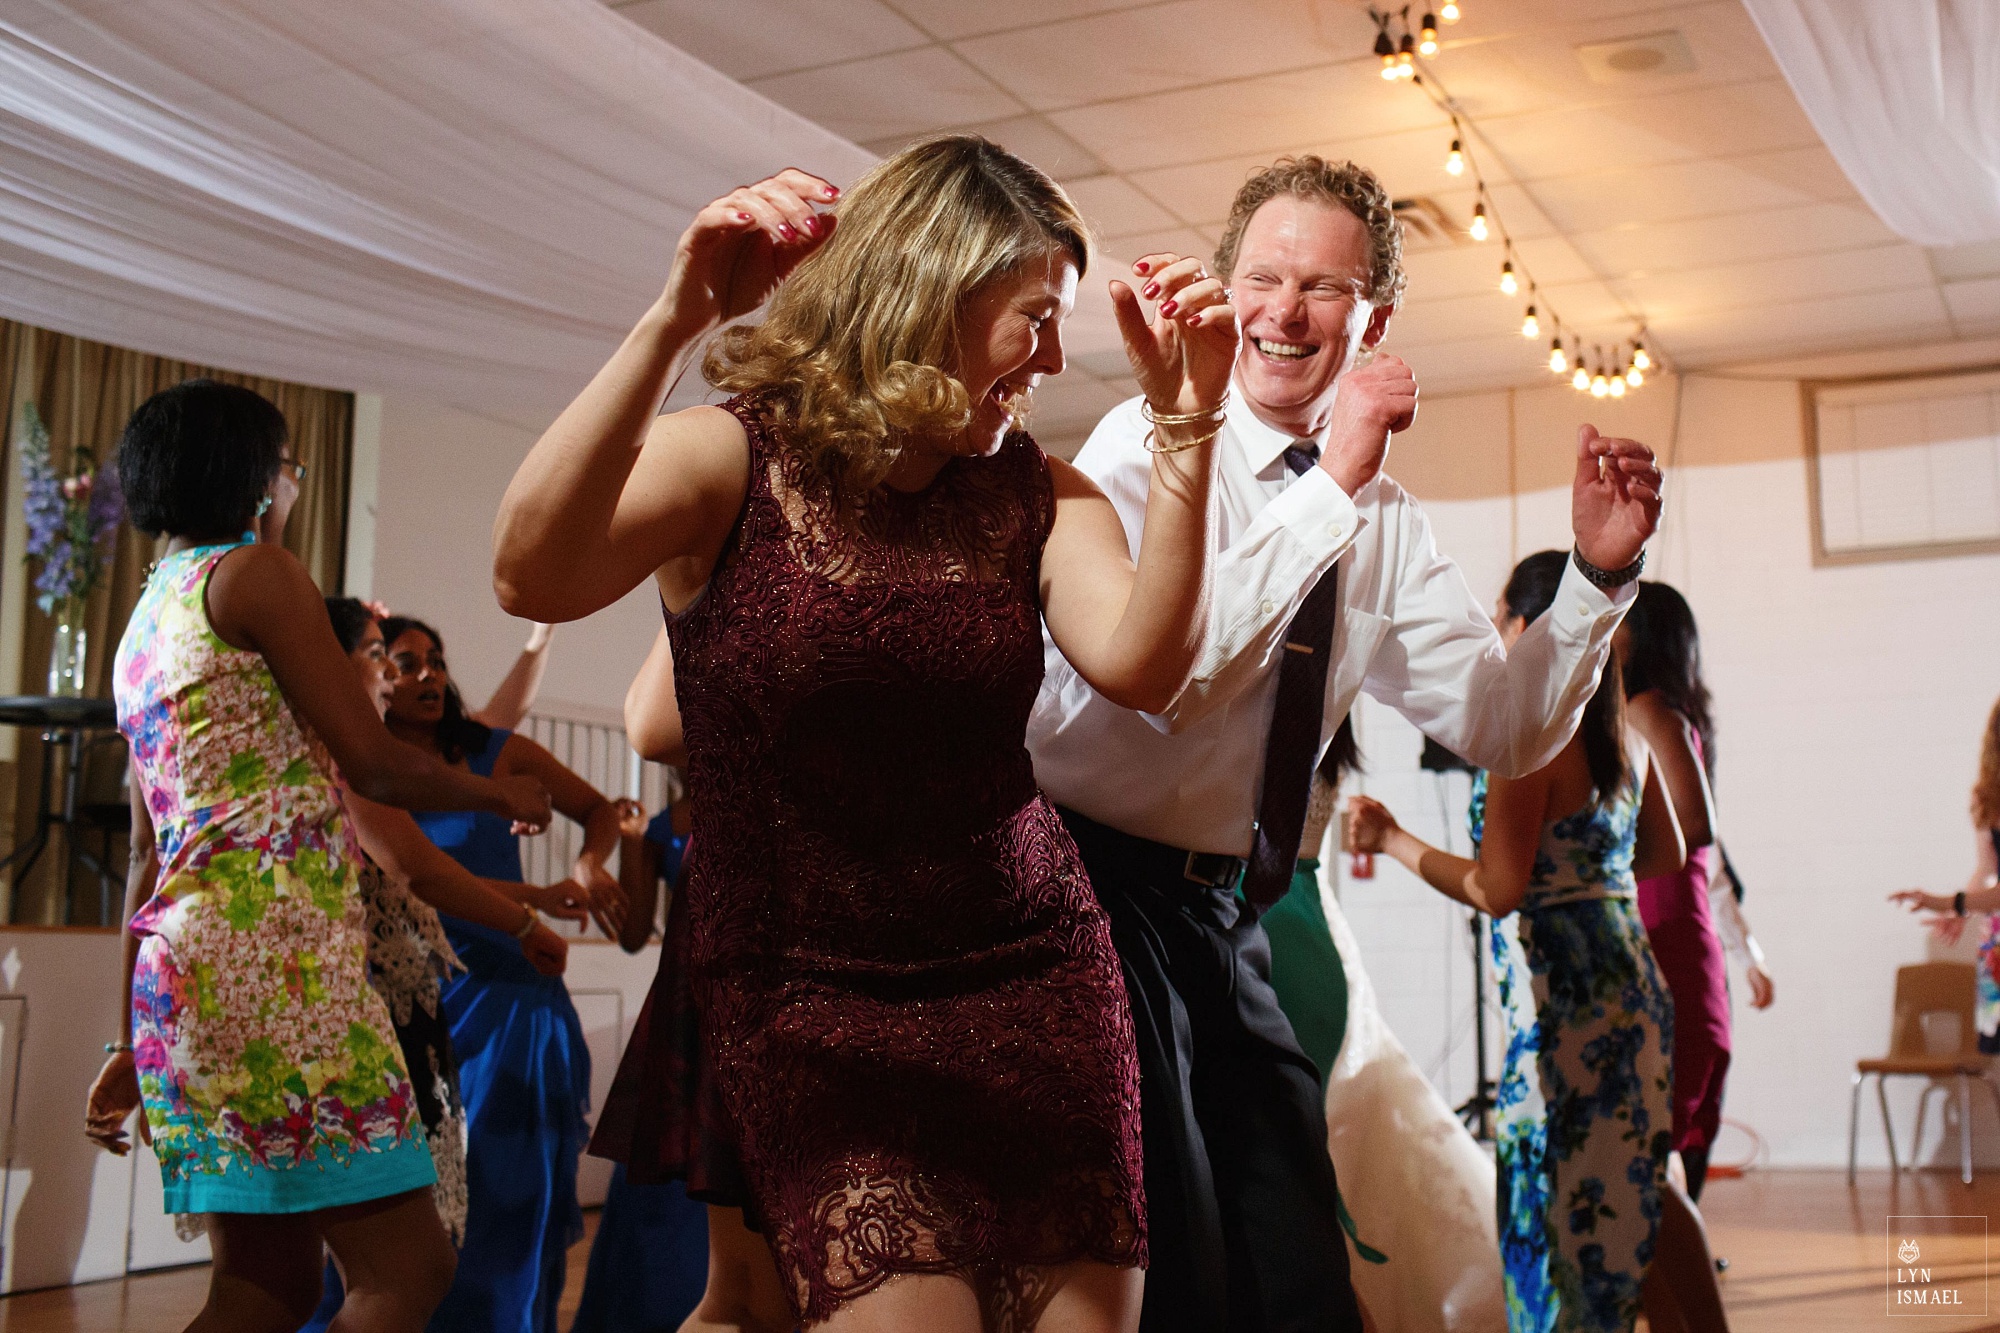 Wedding guests dance at a wedding in Wellesley, Ontario.